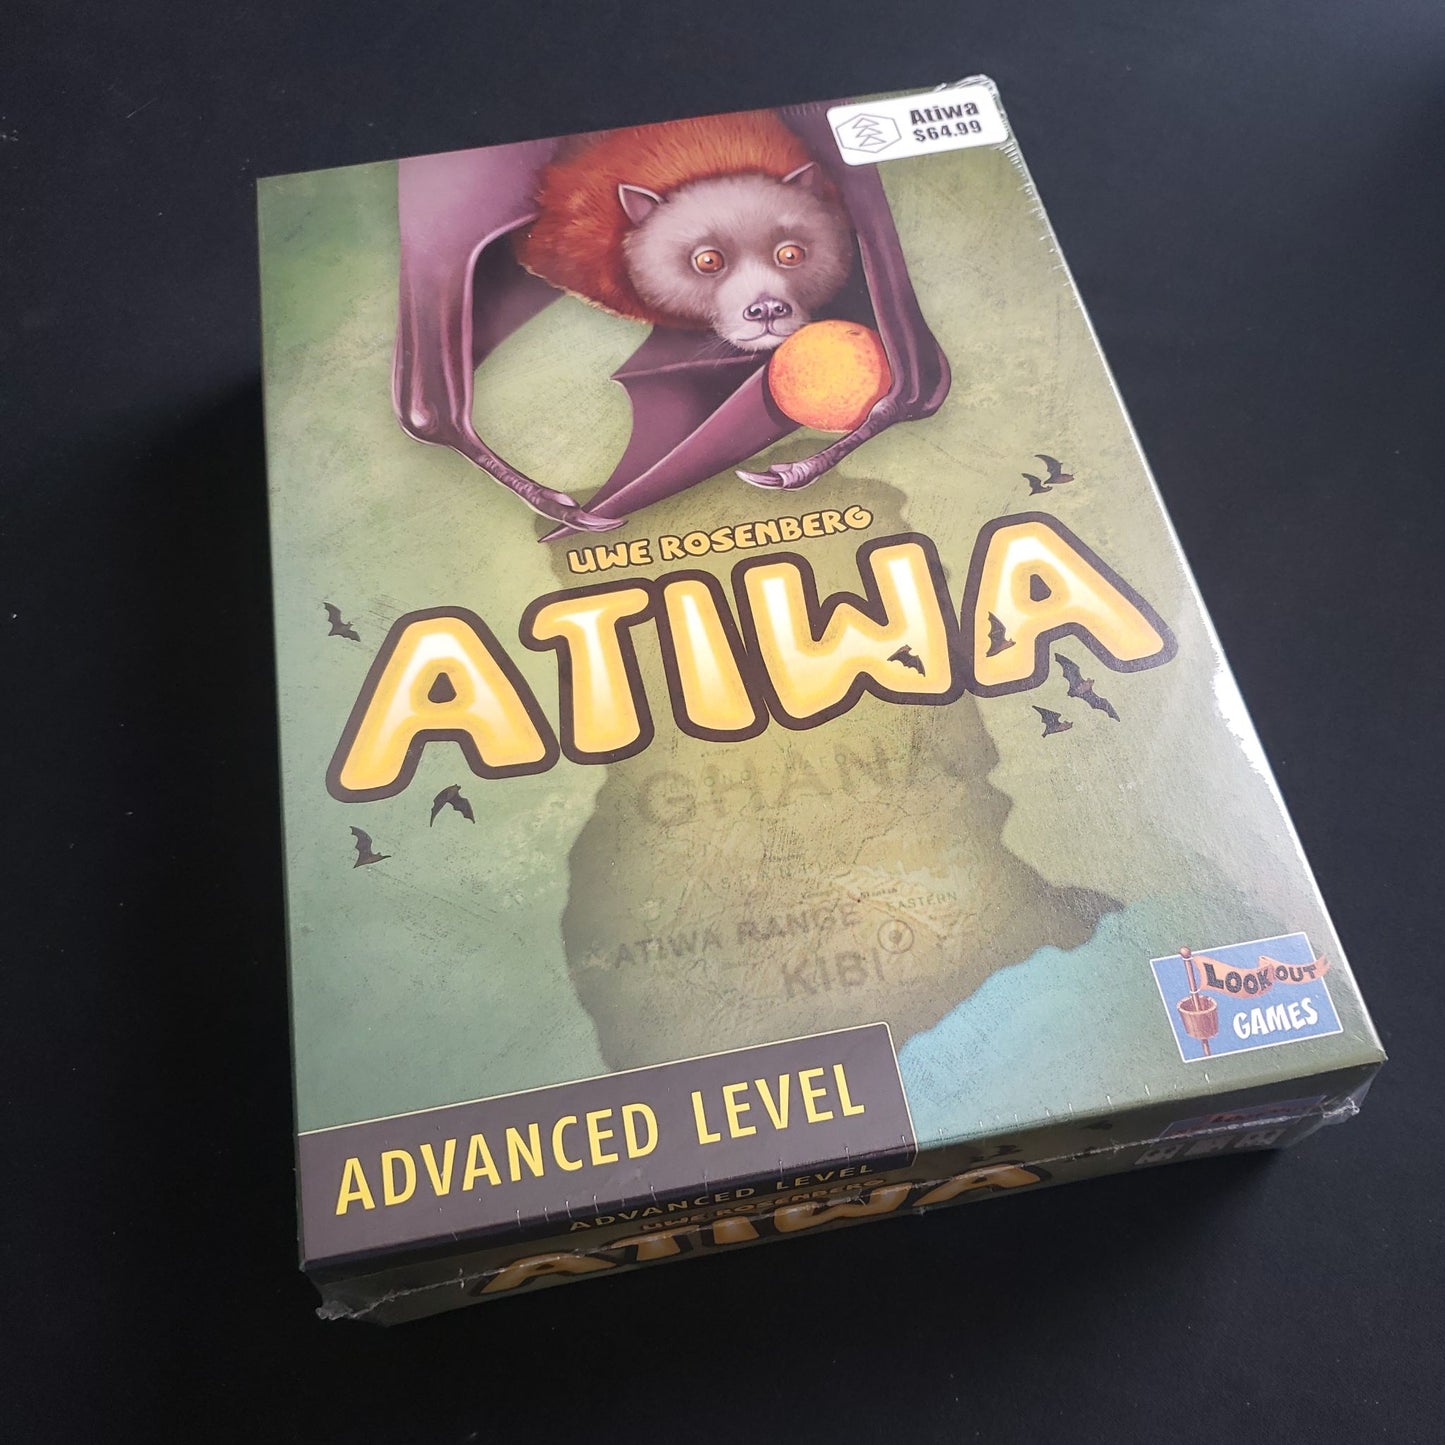 Atiwa board game - front cover of box